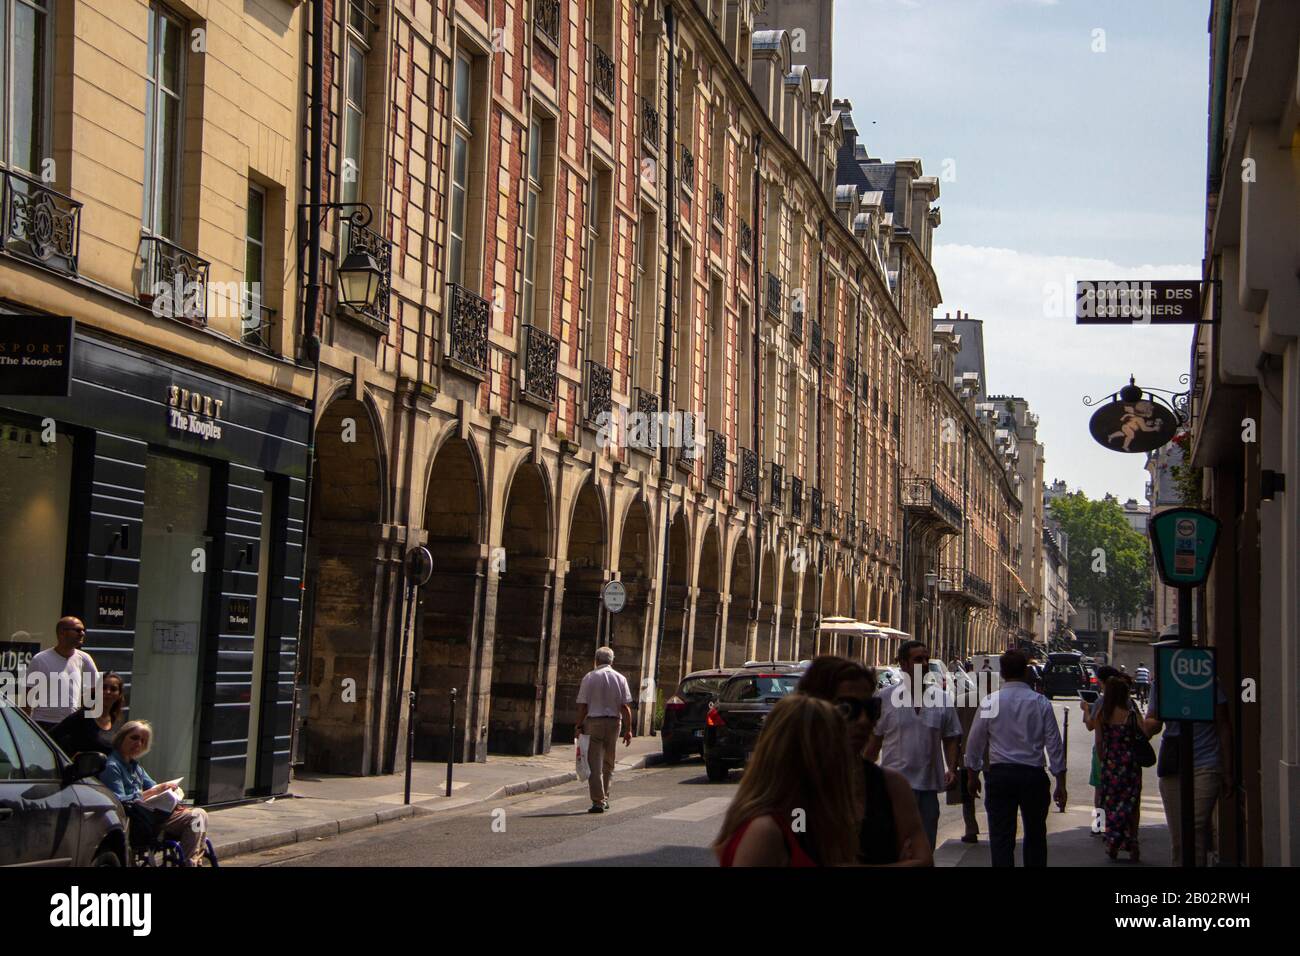 Busy street life in Place des Vosges, Paris Stock Photo